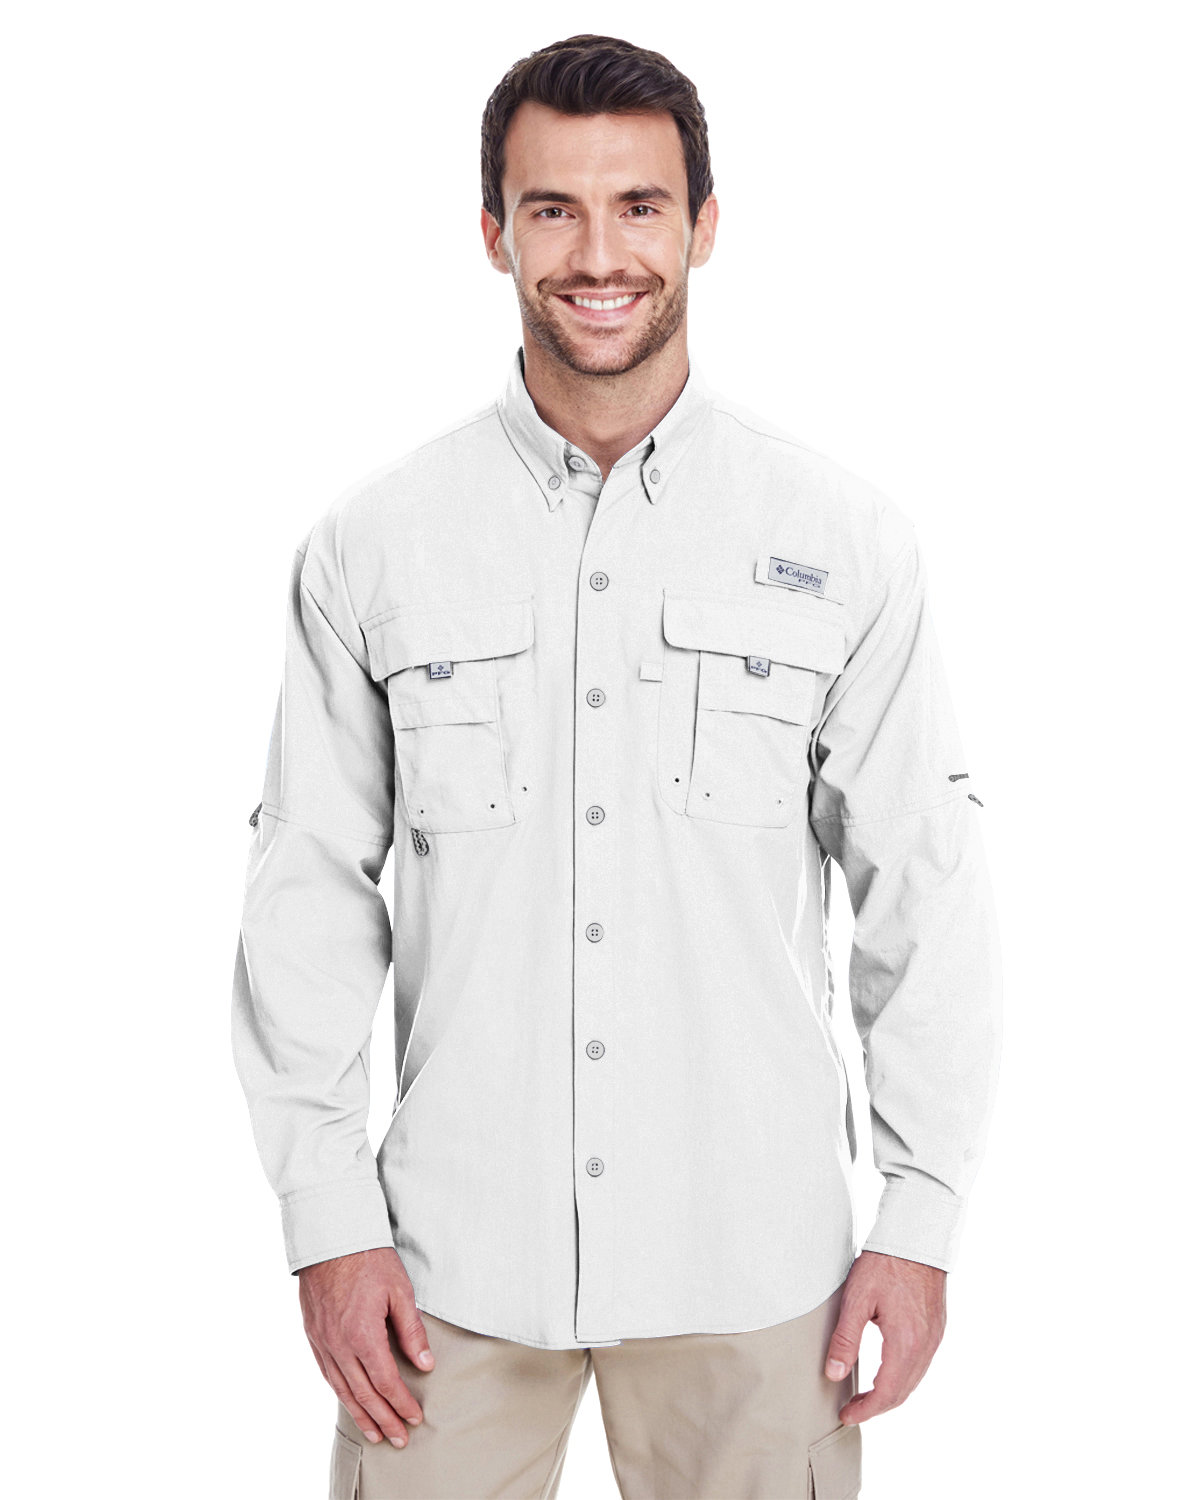 COLUMBIA Performance Fishing Gear size XL white long sleeved shirt